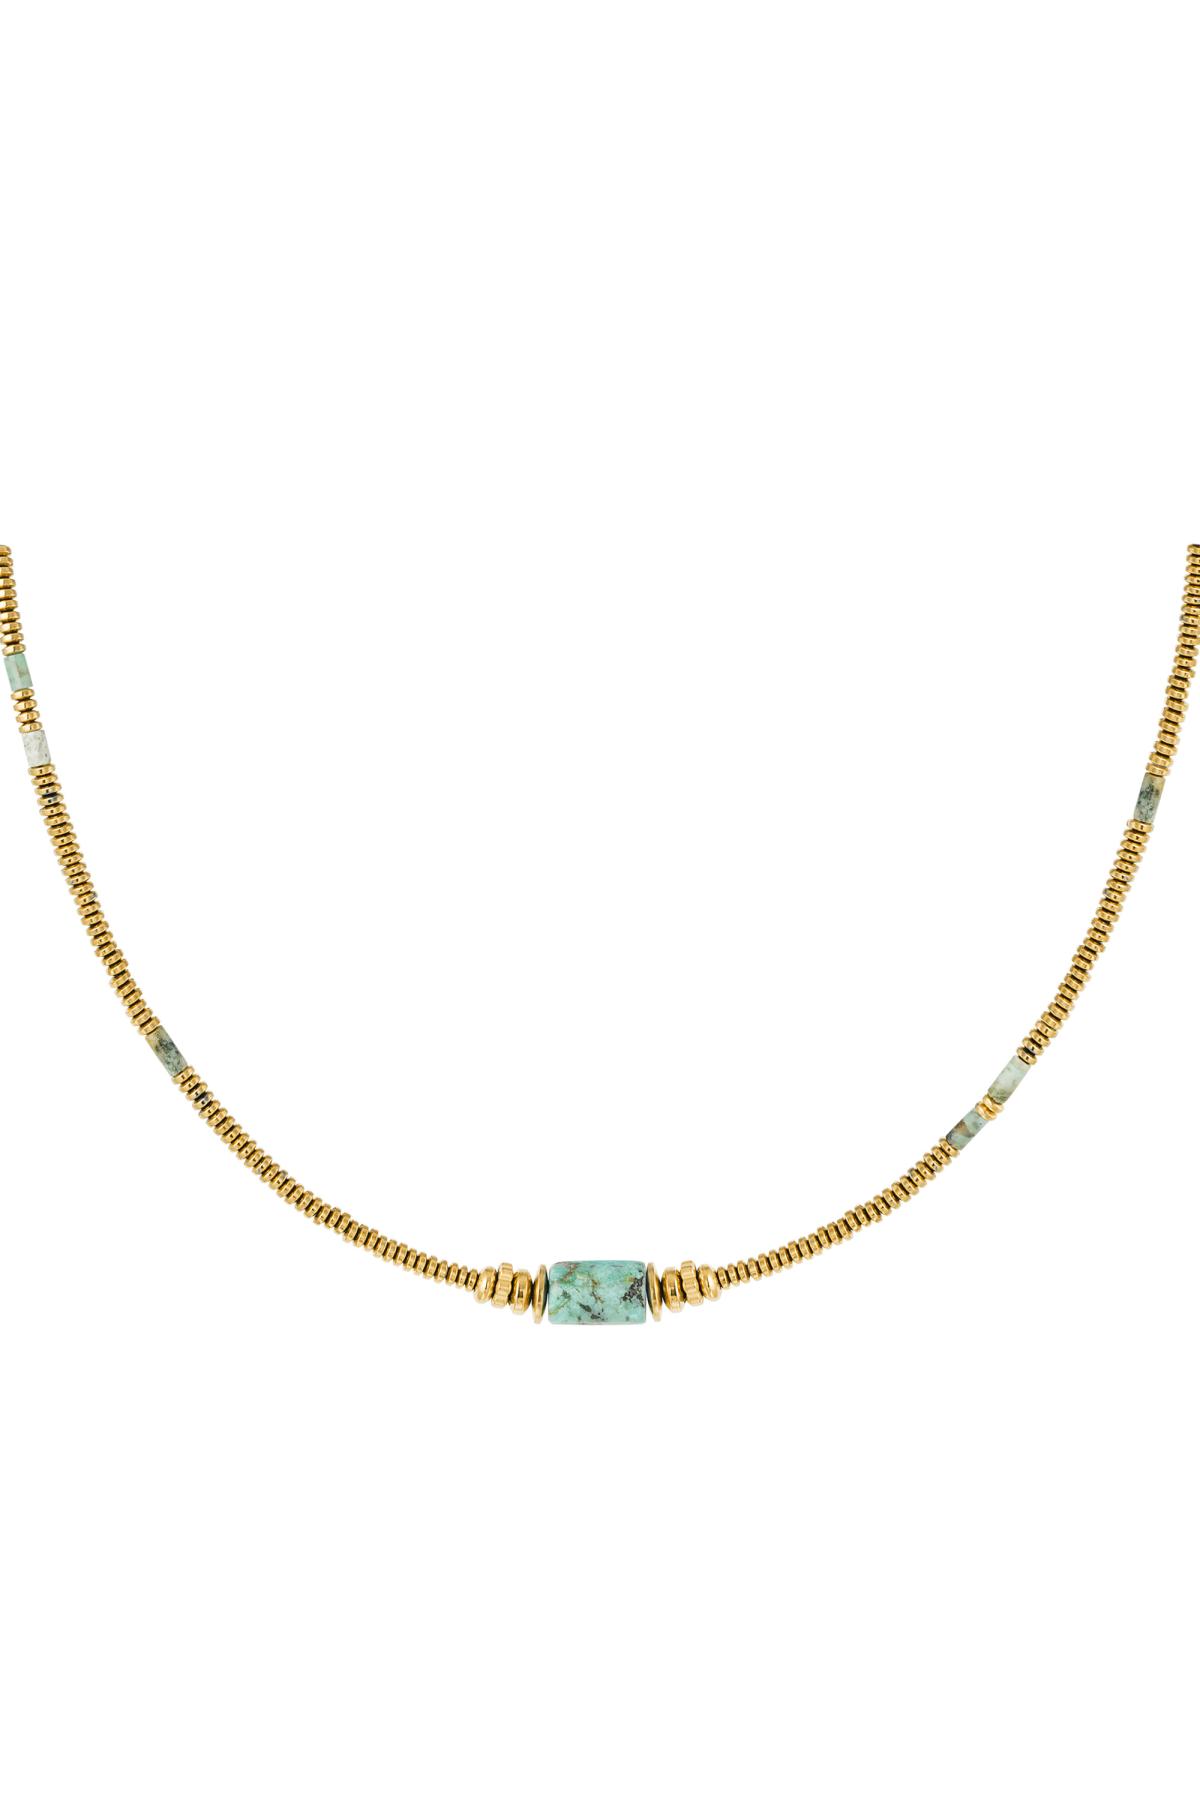 Collar abalorios finos con charm - colección Piedras Naturales Verde & Oro Acero inoxidable h5 